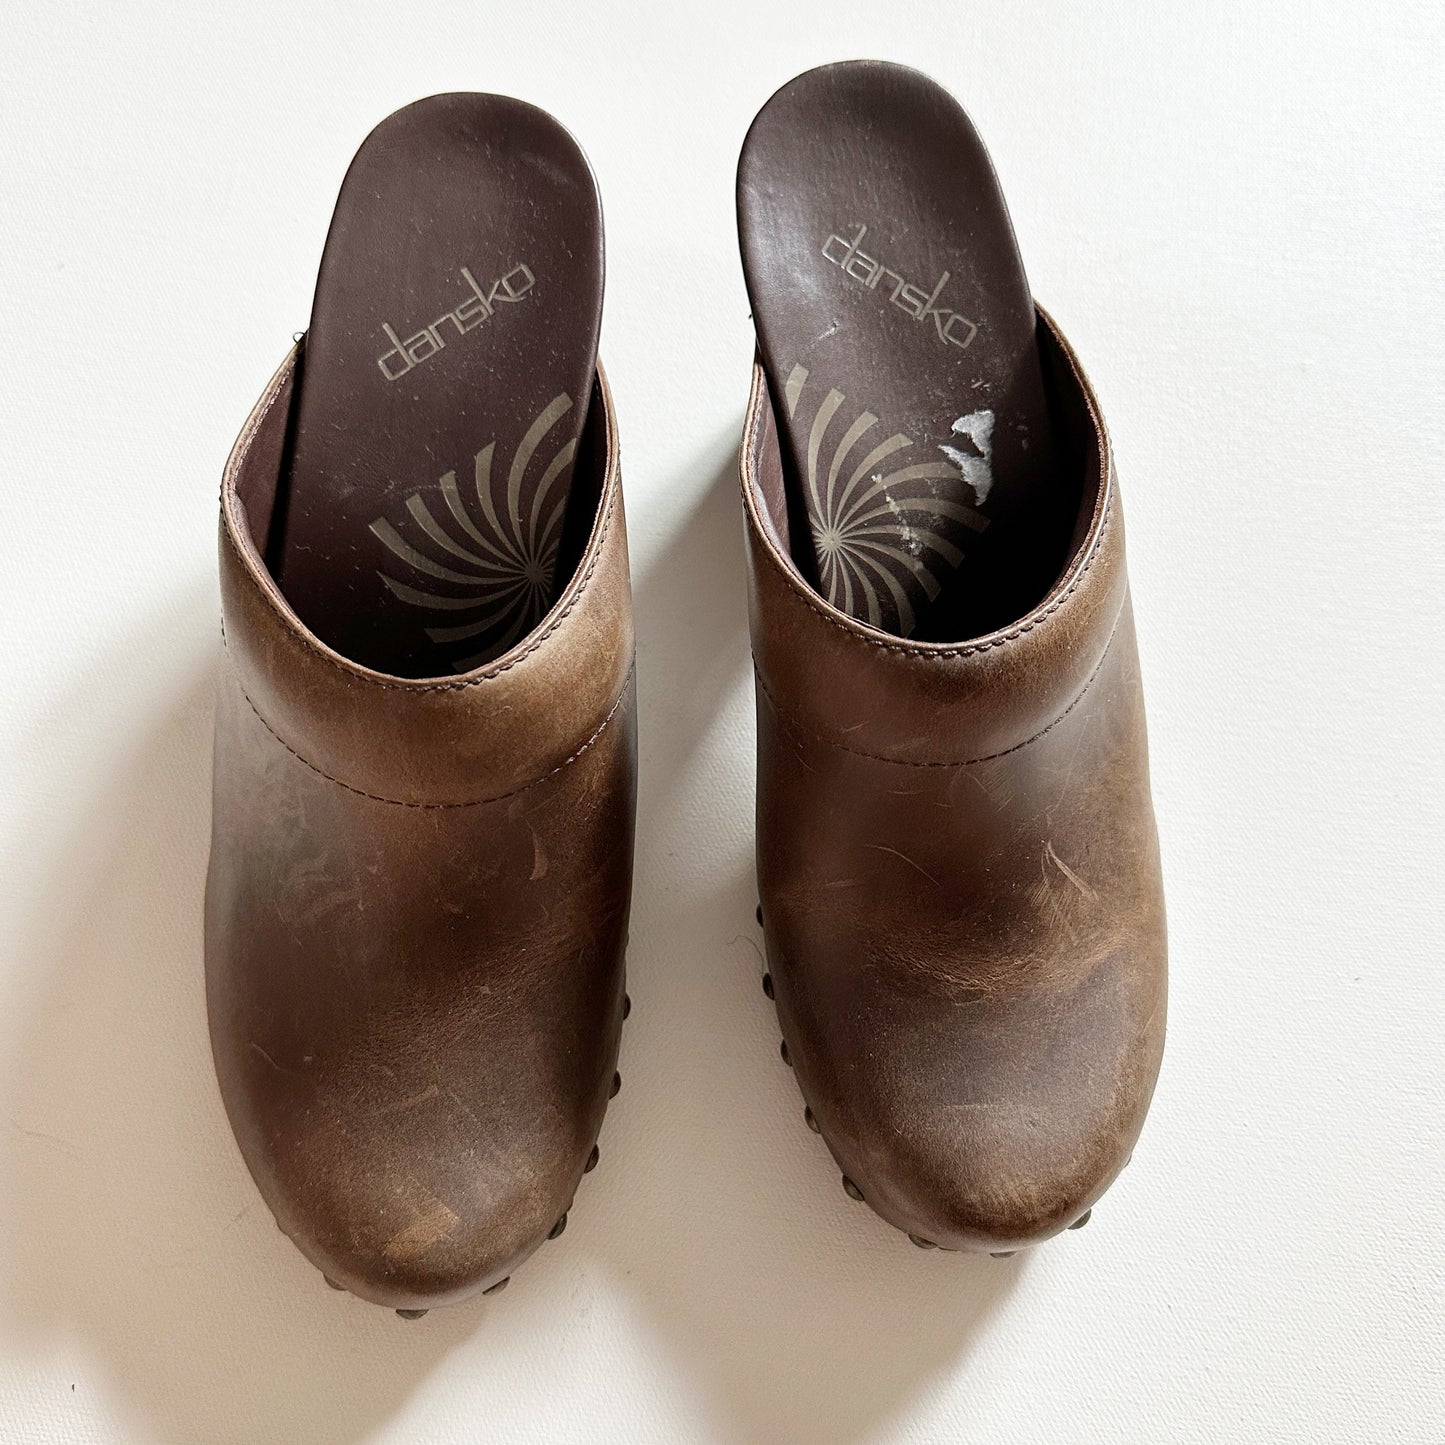 Dansko Rustic Brown Leather Clogs (size 38)